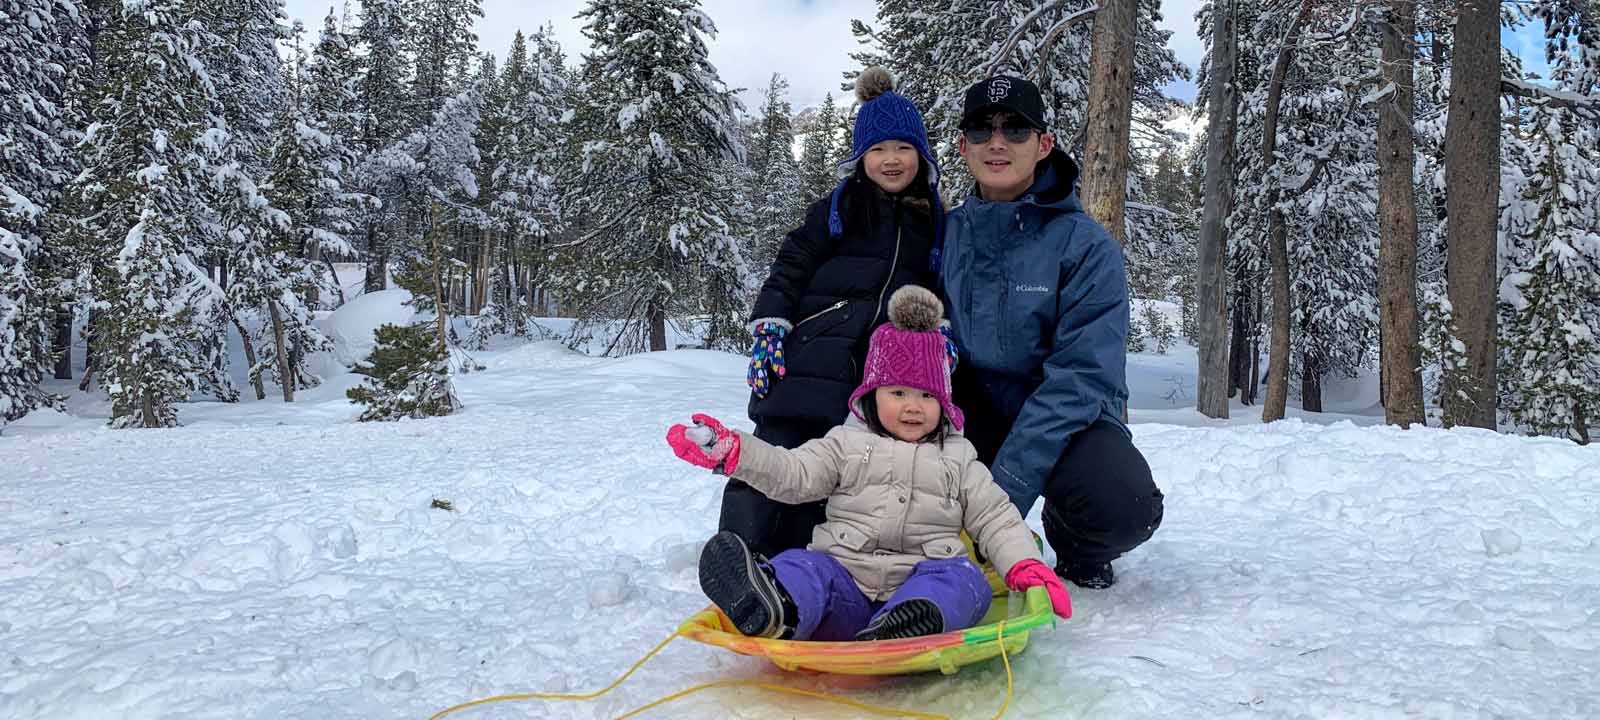 Seungho sledding with his kids.